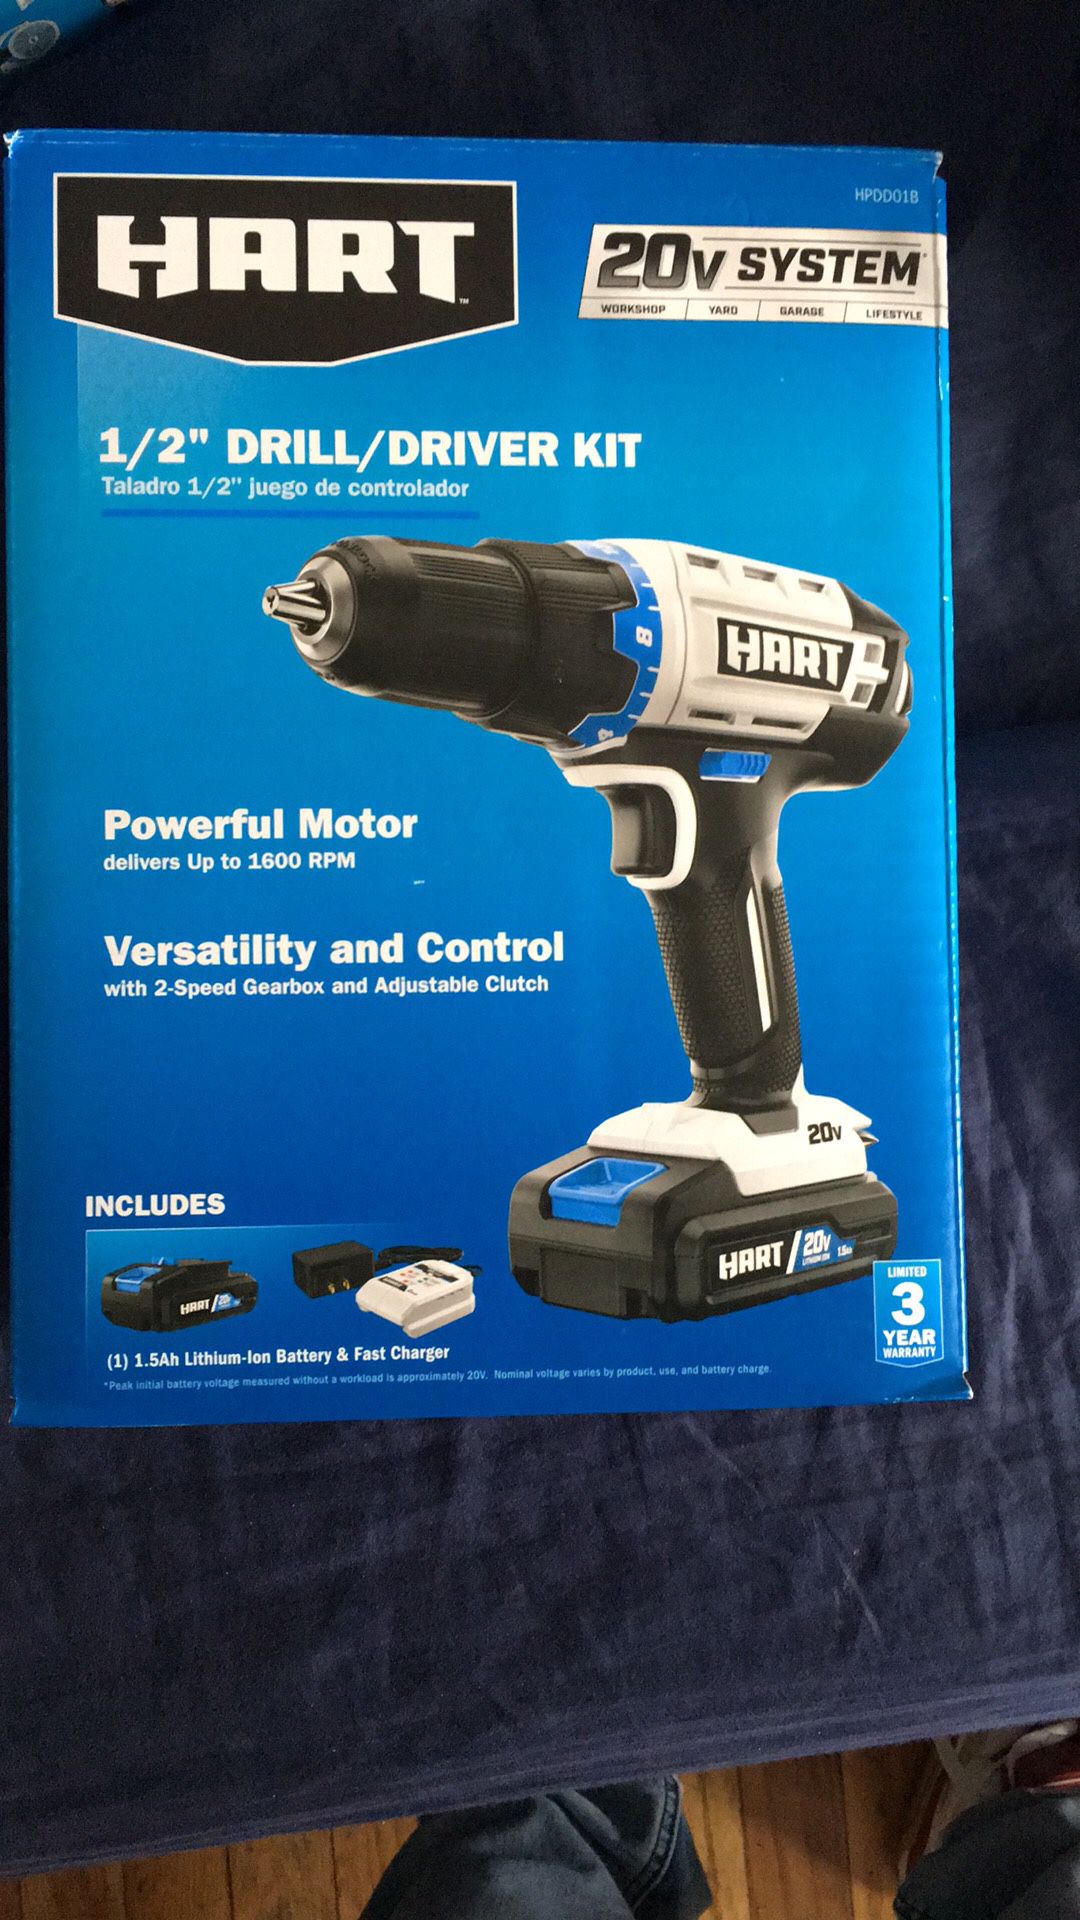 1/2 drill kit driver kit